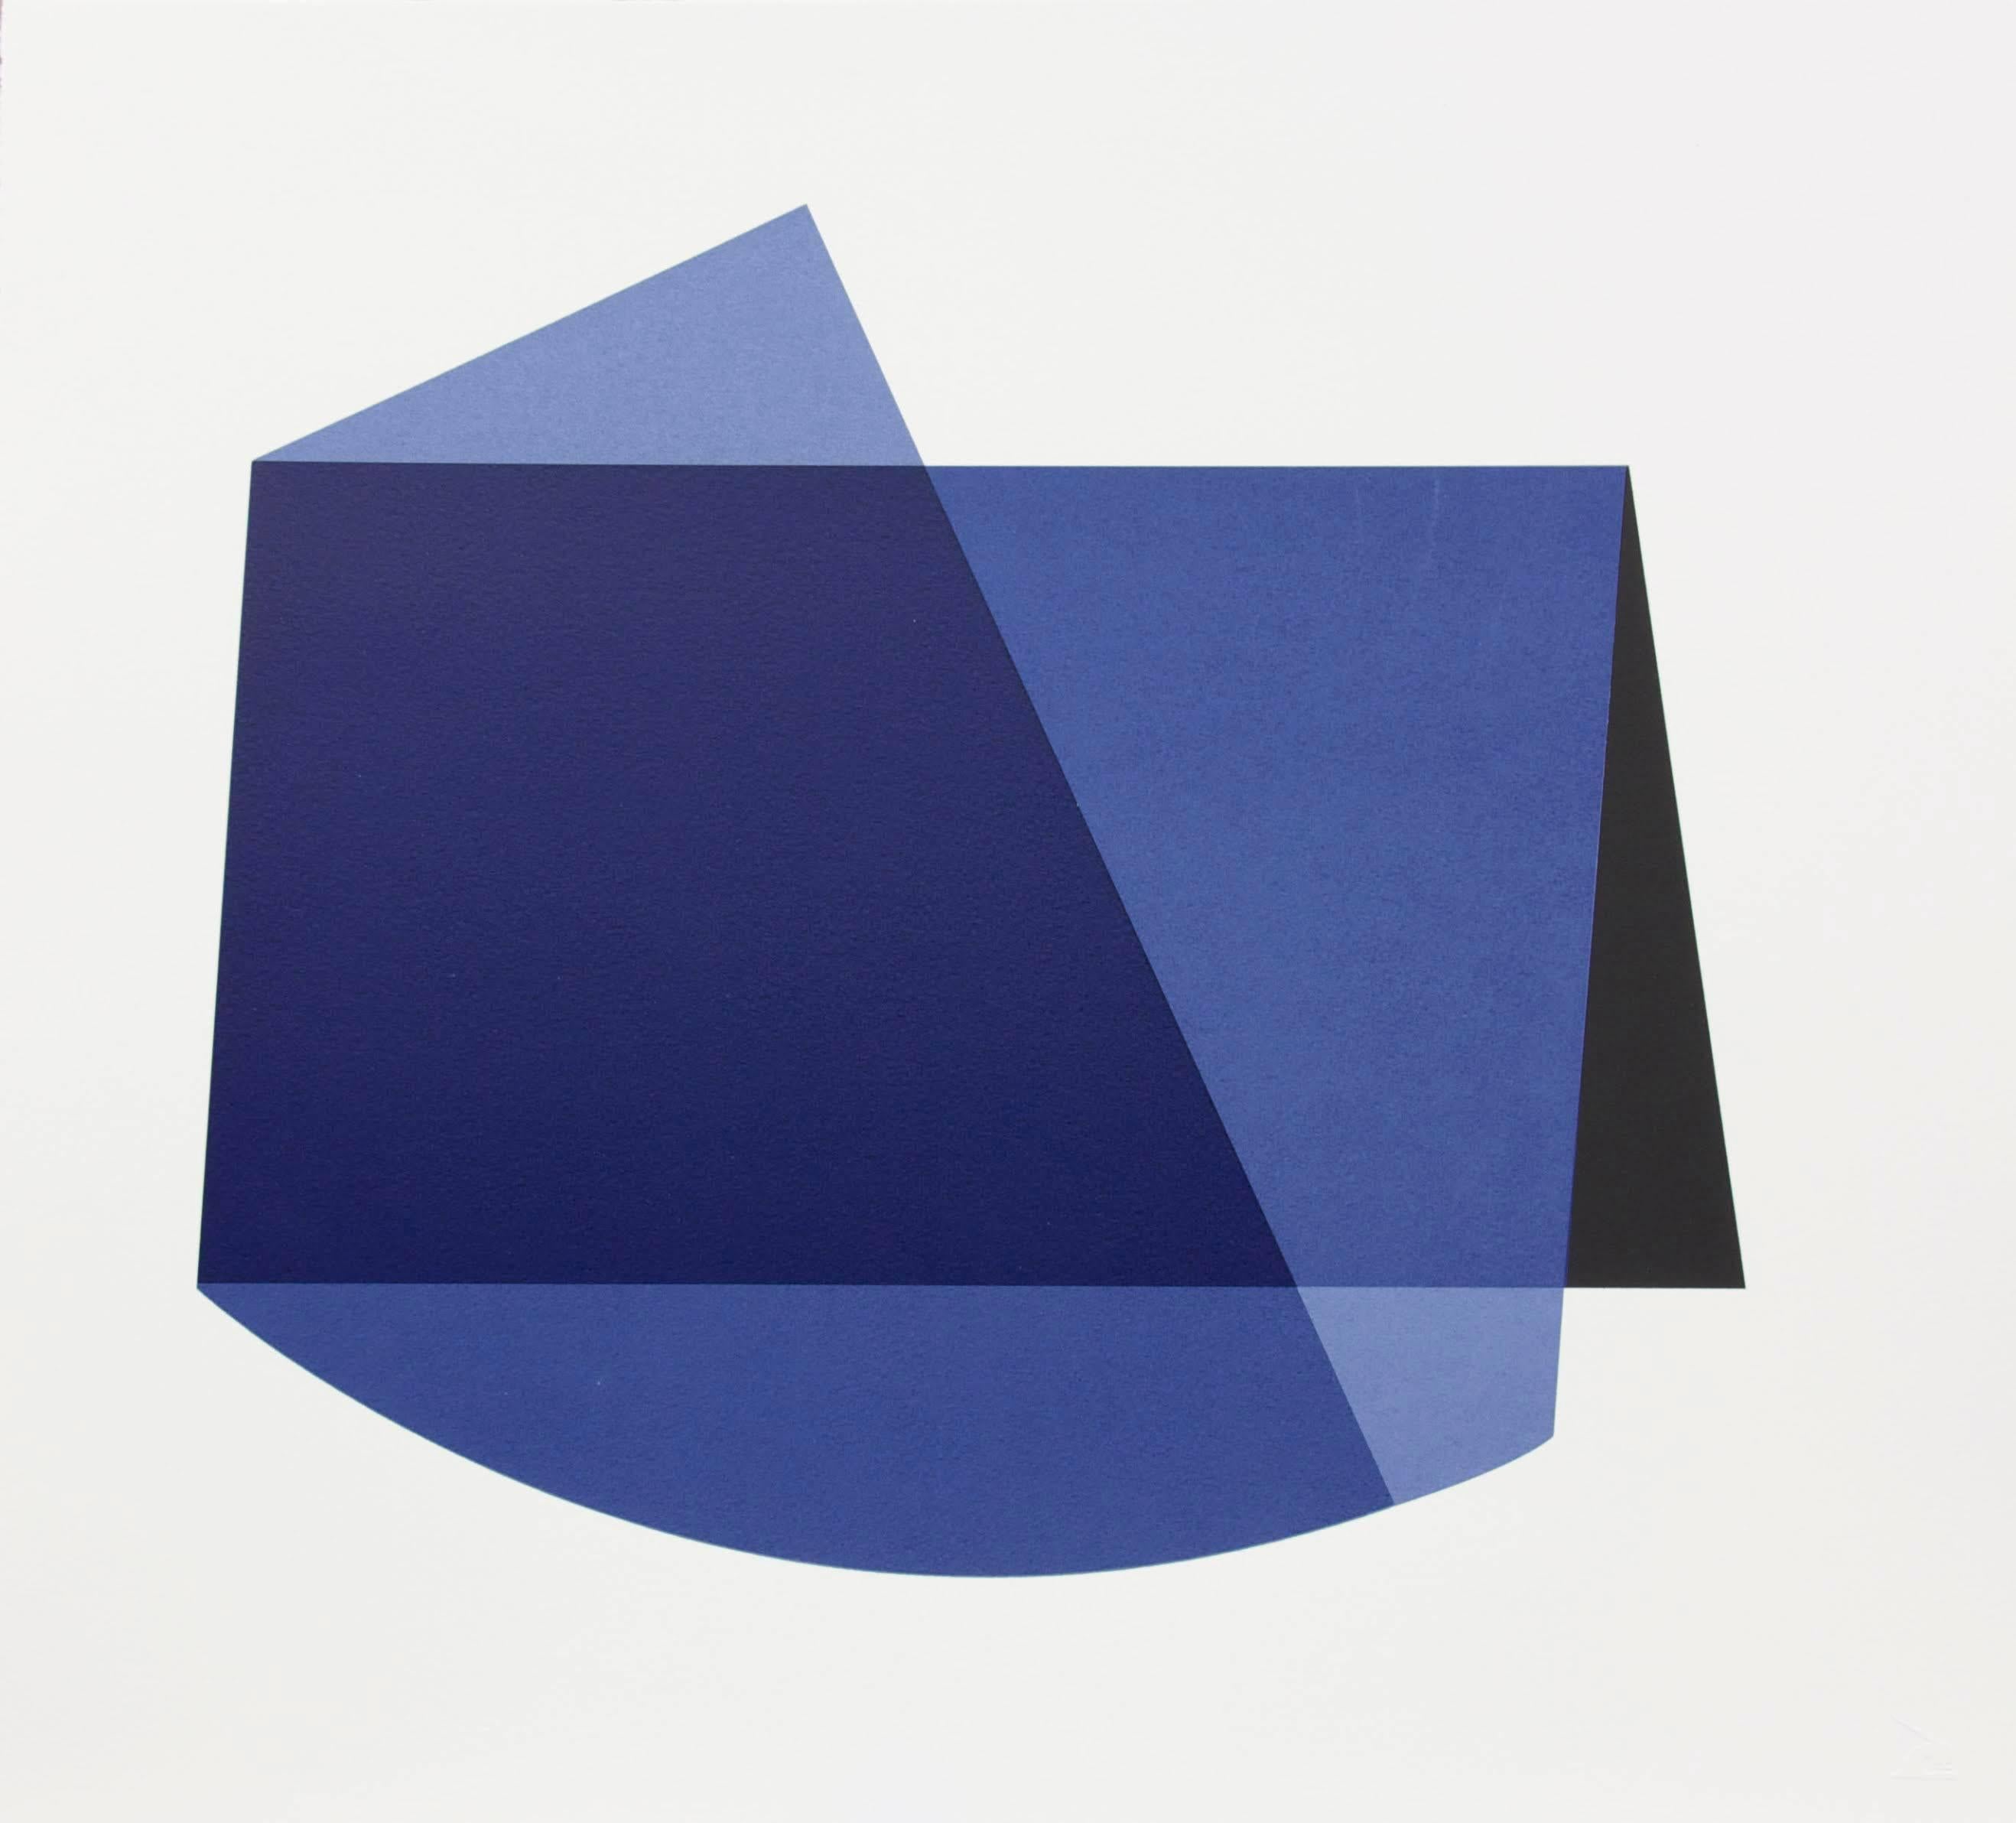 Willard Boepple Abstract Print - 20.11.13 W